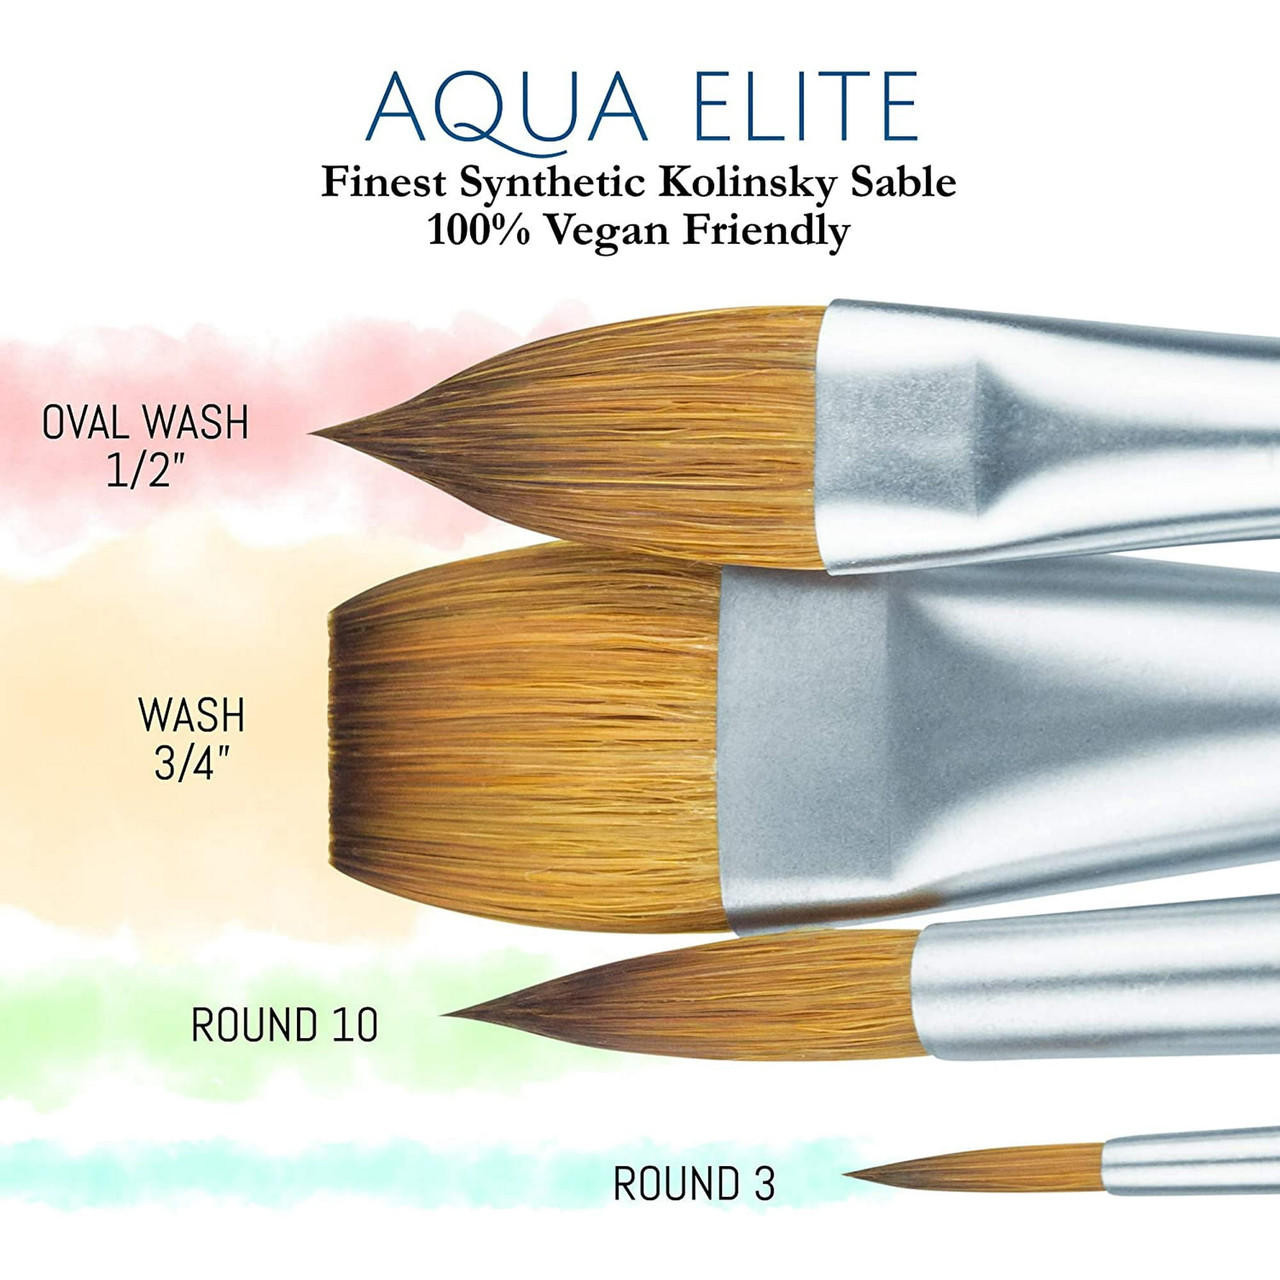 Princeton Aqua Elite Series 4850 Synthetic Kolinsky Sable Brush Sets